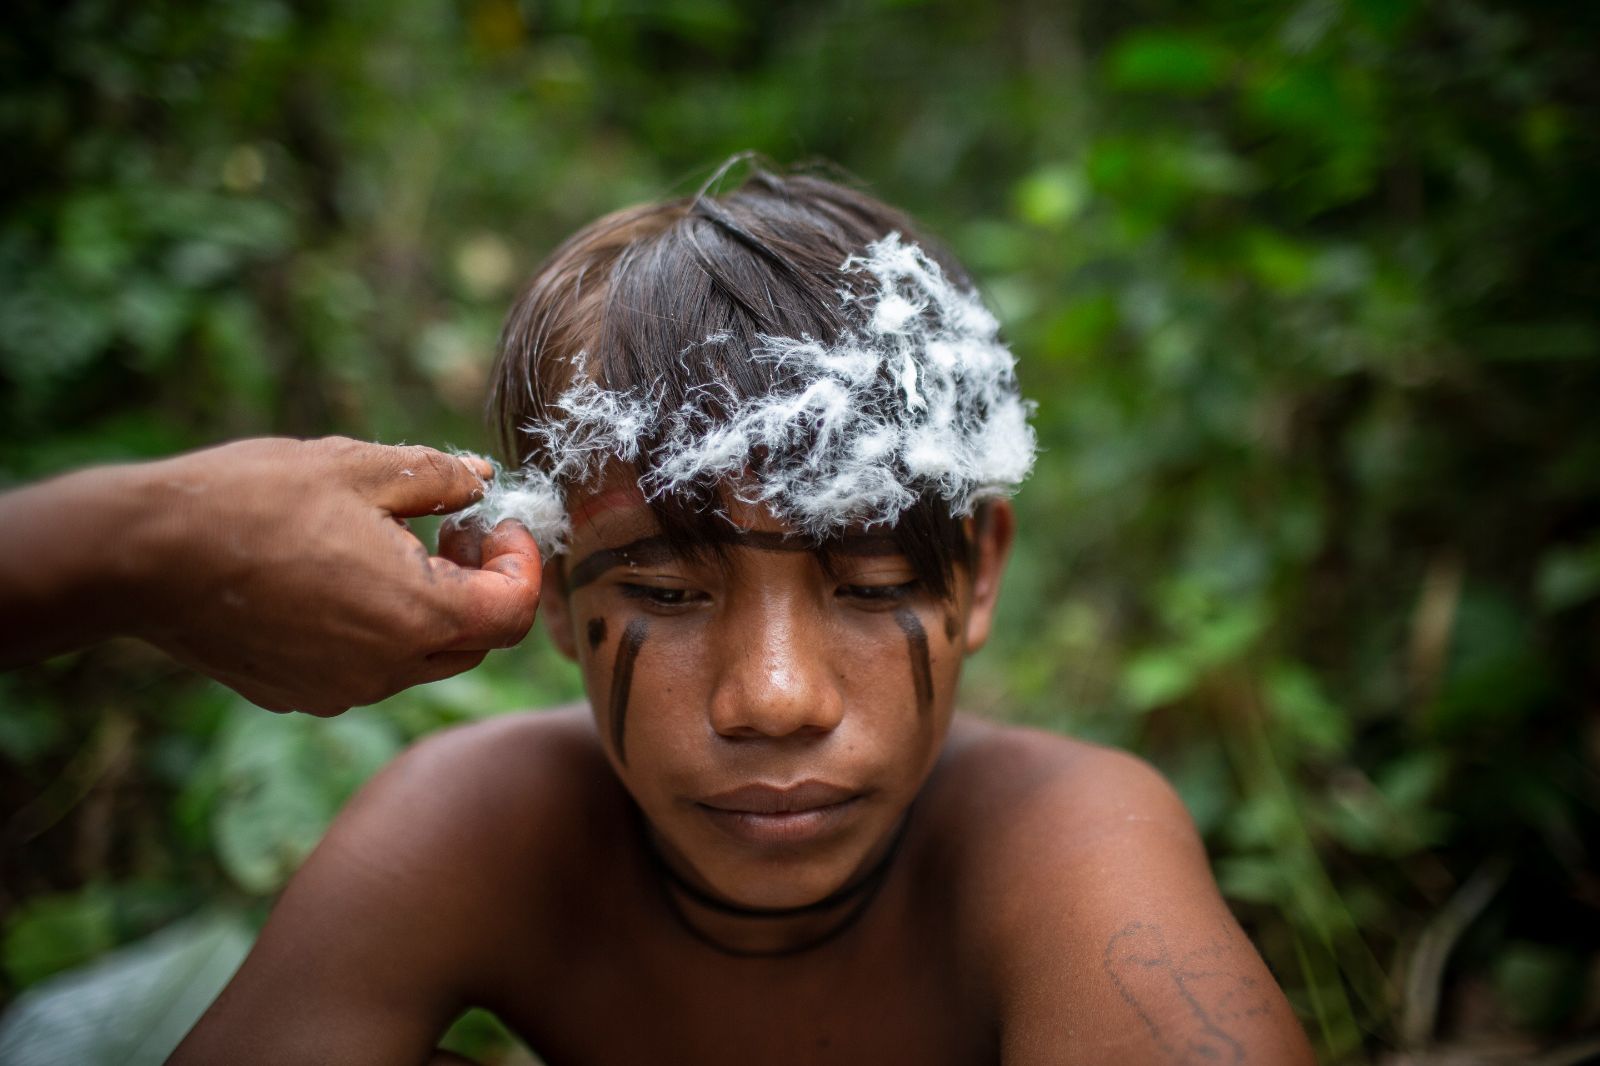 The beautiful and sad truth of the Amazon - Archyworldys